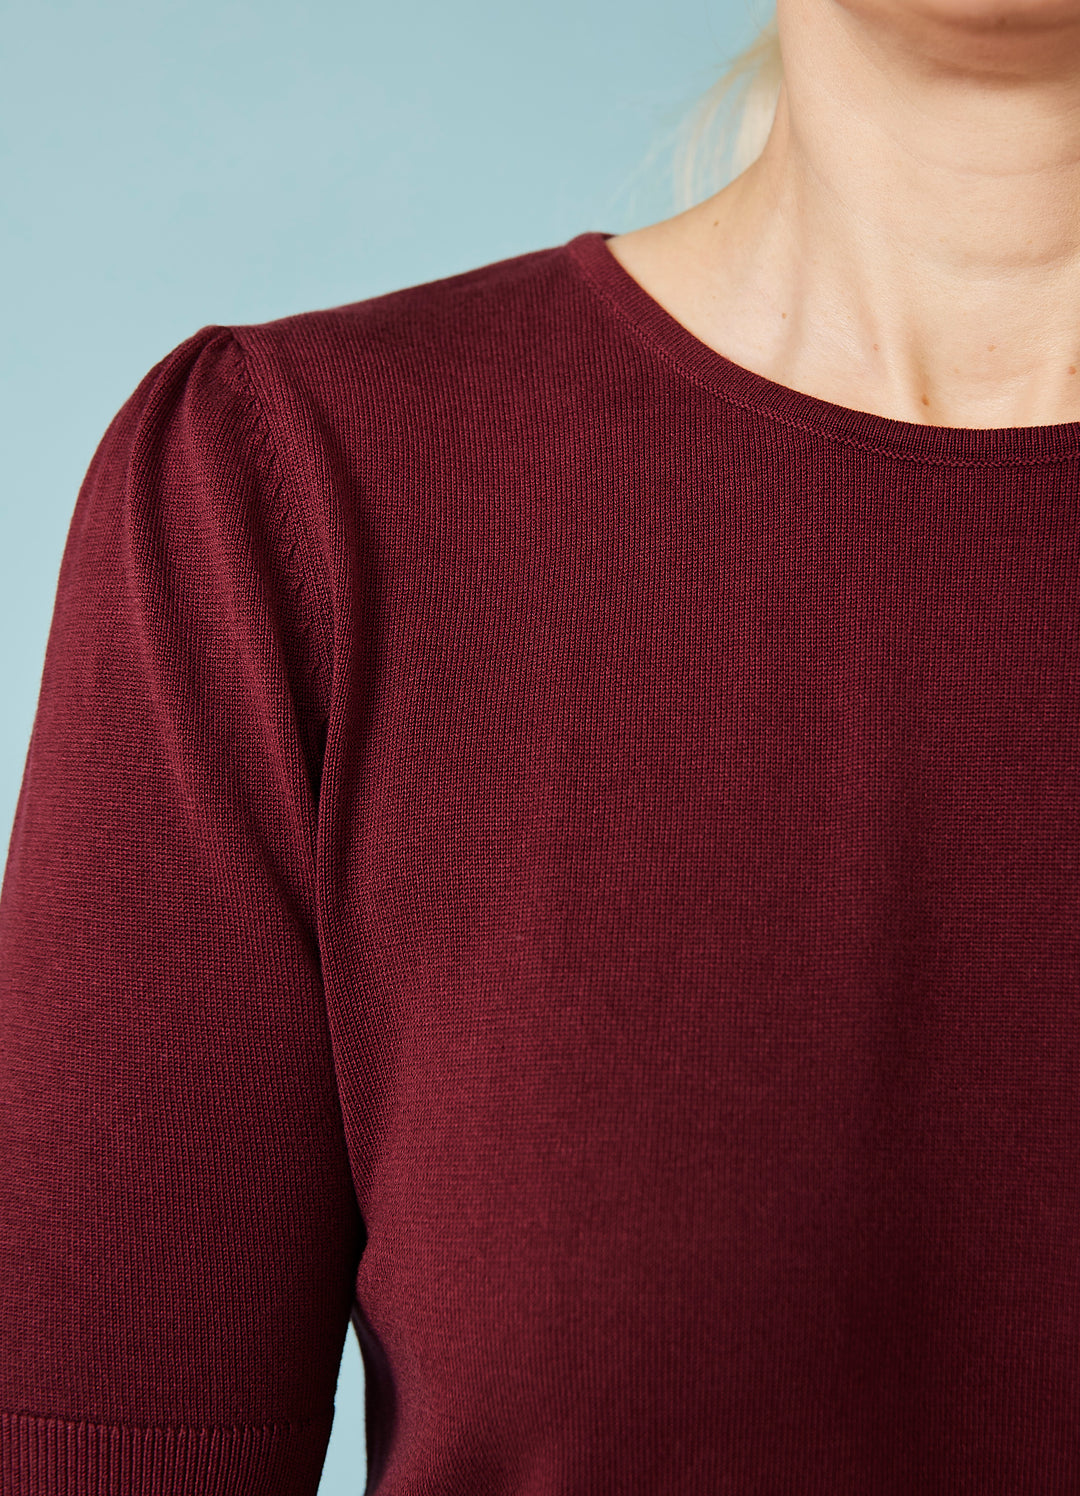 Chrissie Plain Knitted Top - burgundy